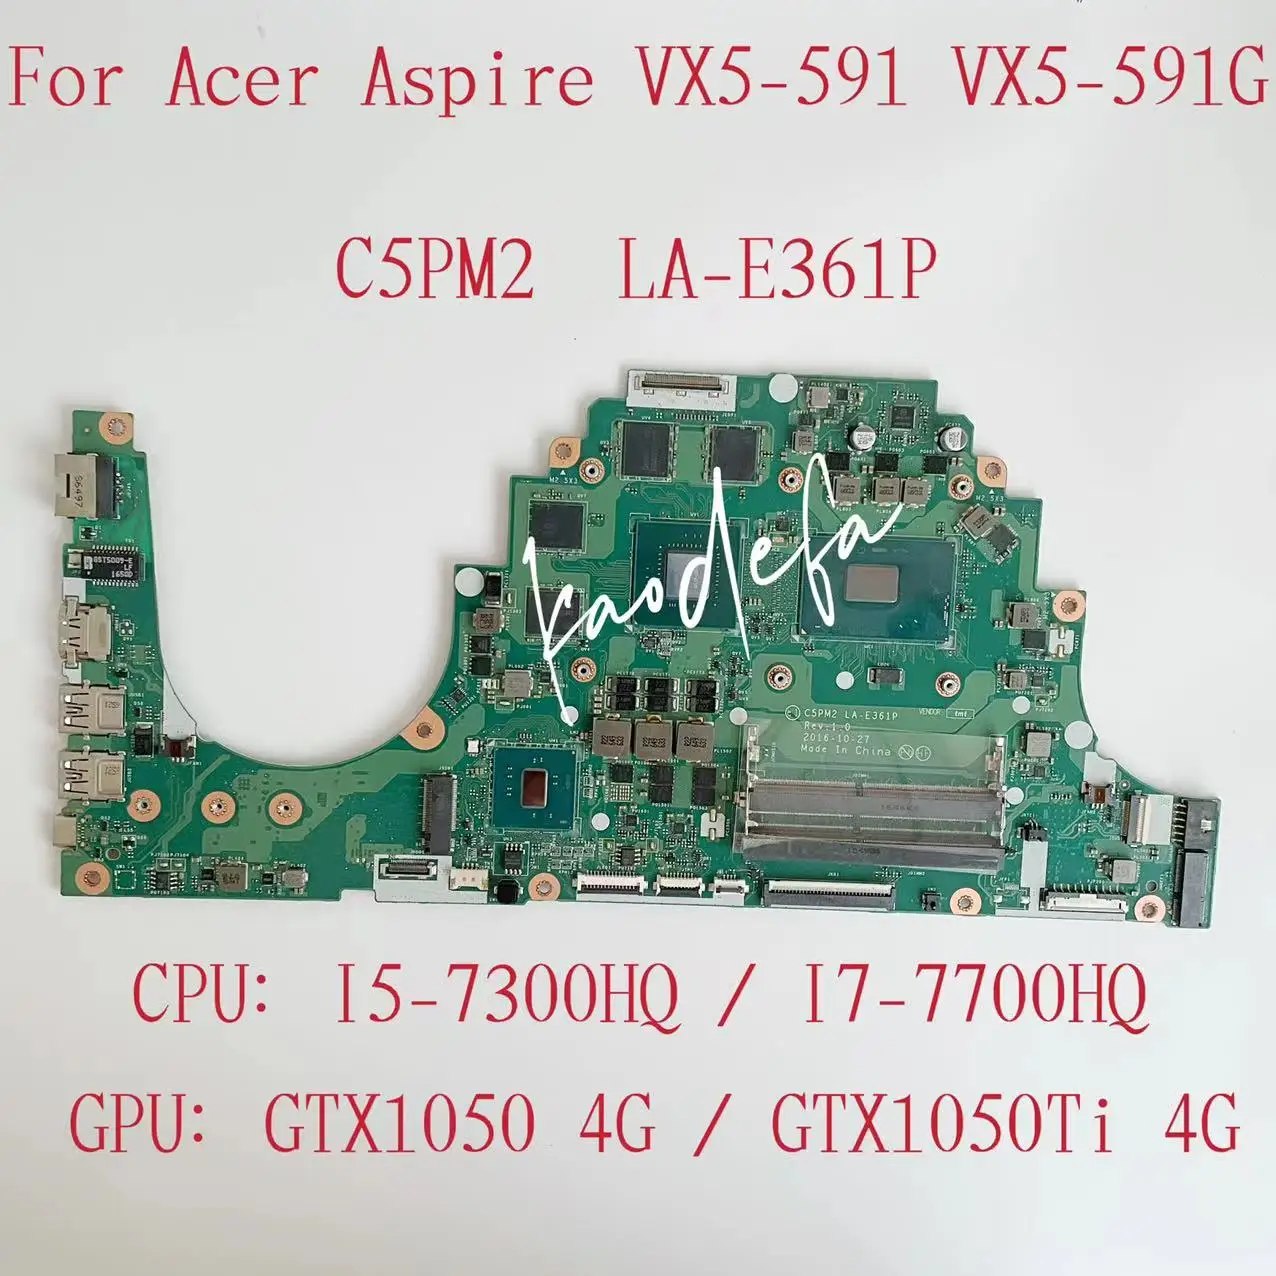 C5PM2 LA-E361P Mainboard för Acer Aspire VX5-591 Laptop Motherboard CPU I5-7300HQ / I7-7700HQ GPU: GTX1050 / 1050TI 4G Test OK